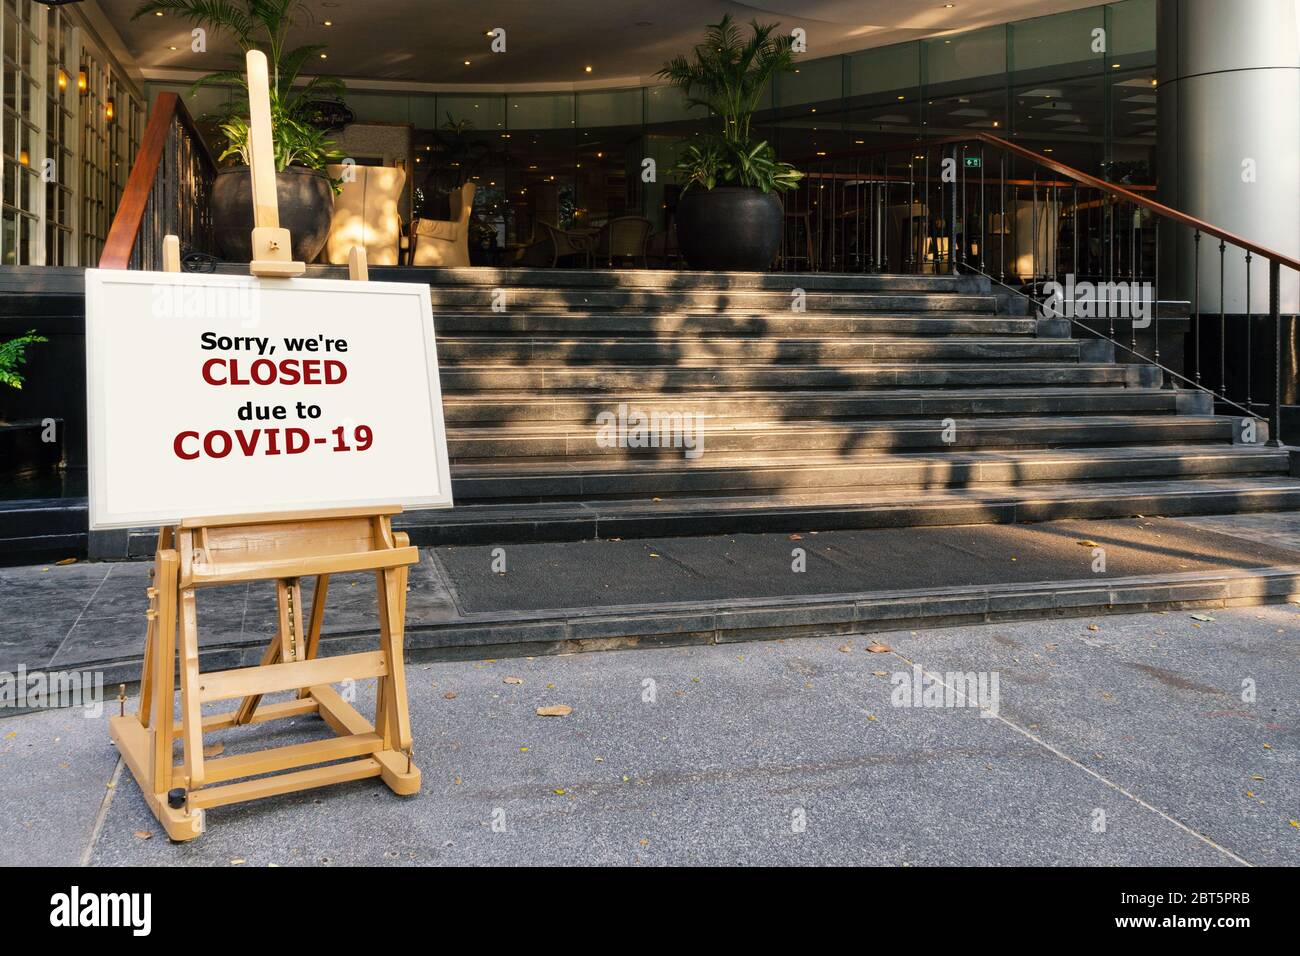 restaurant, hotel, company, shopping center closed due to coronavirus or covid-19 pandemic outbreak lockdown. coronavirus news temporarily closed boar Stock Photo